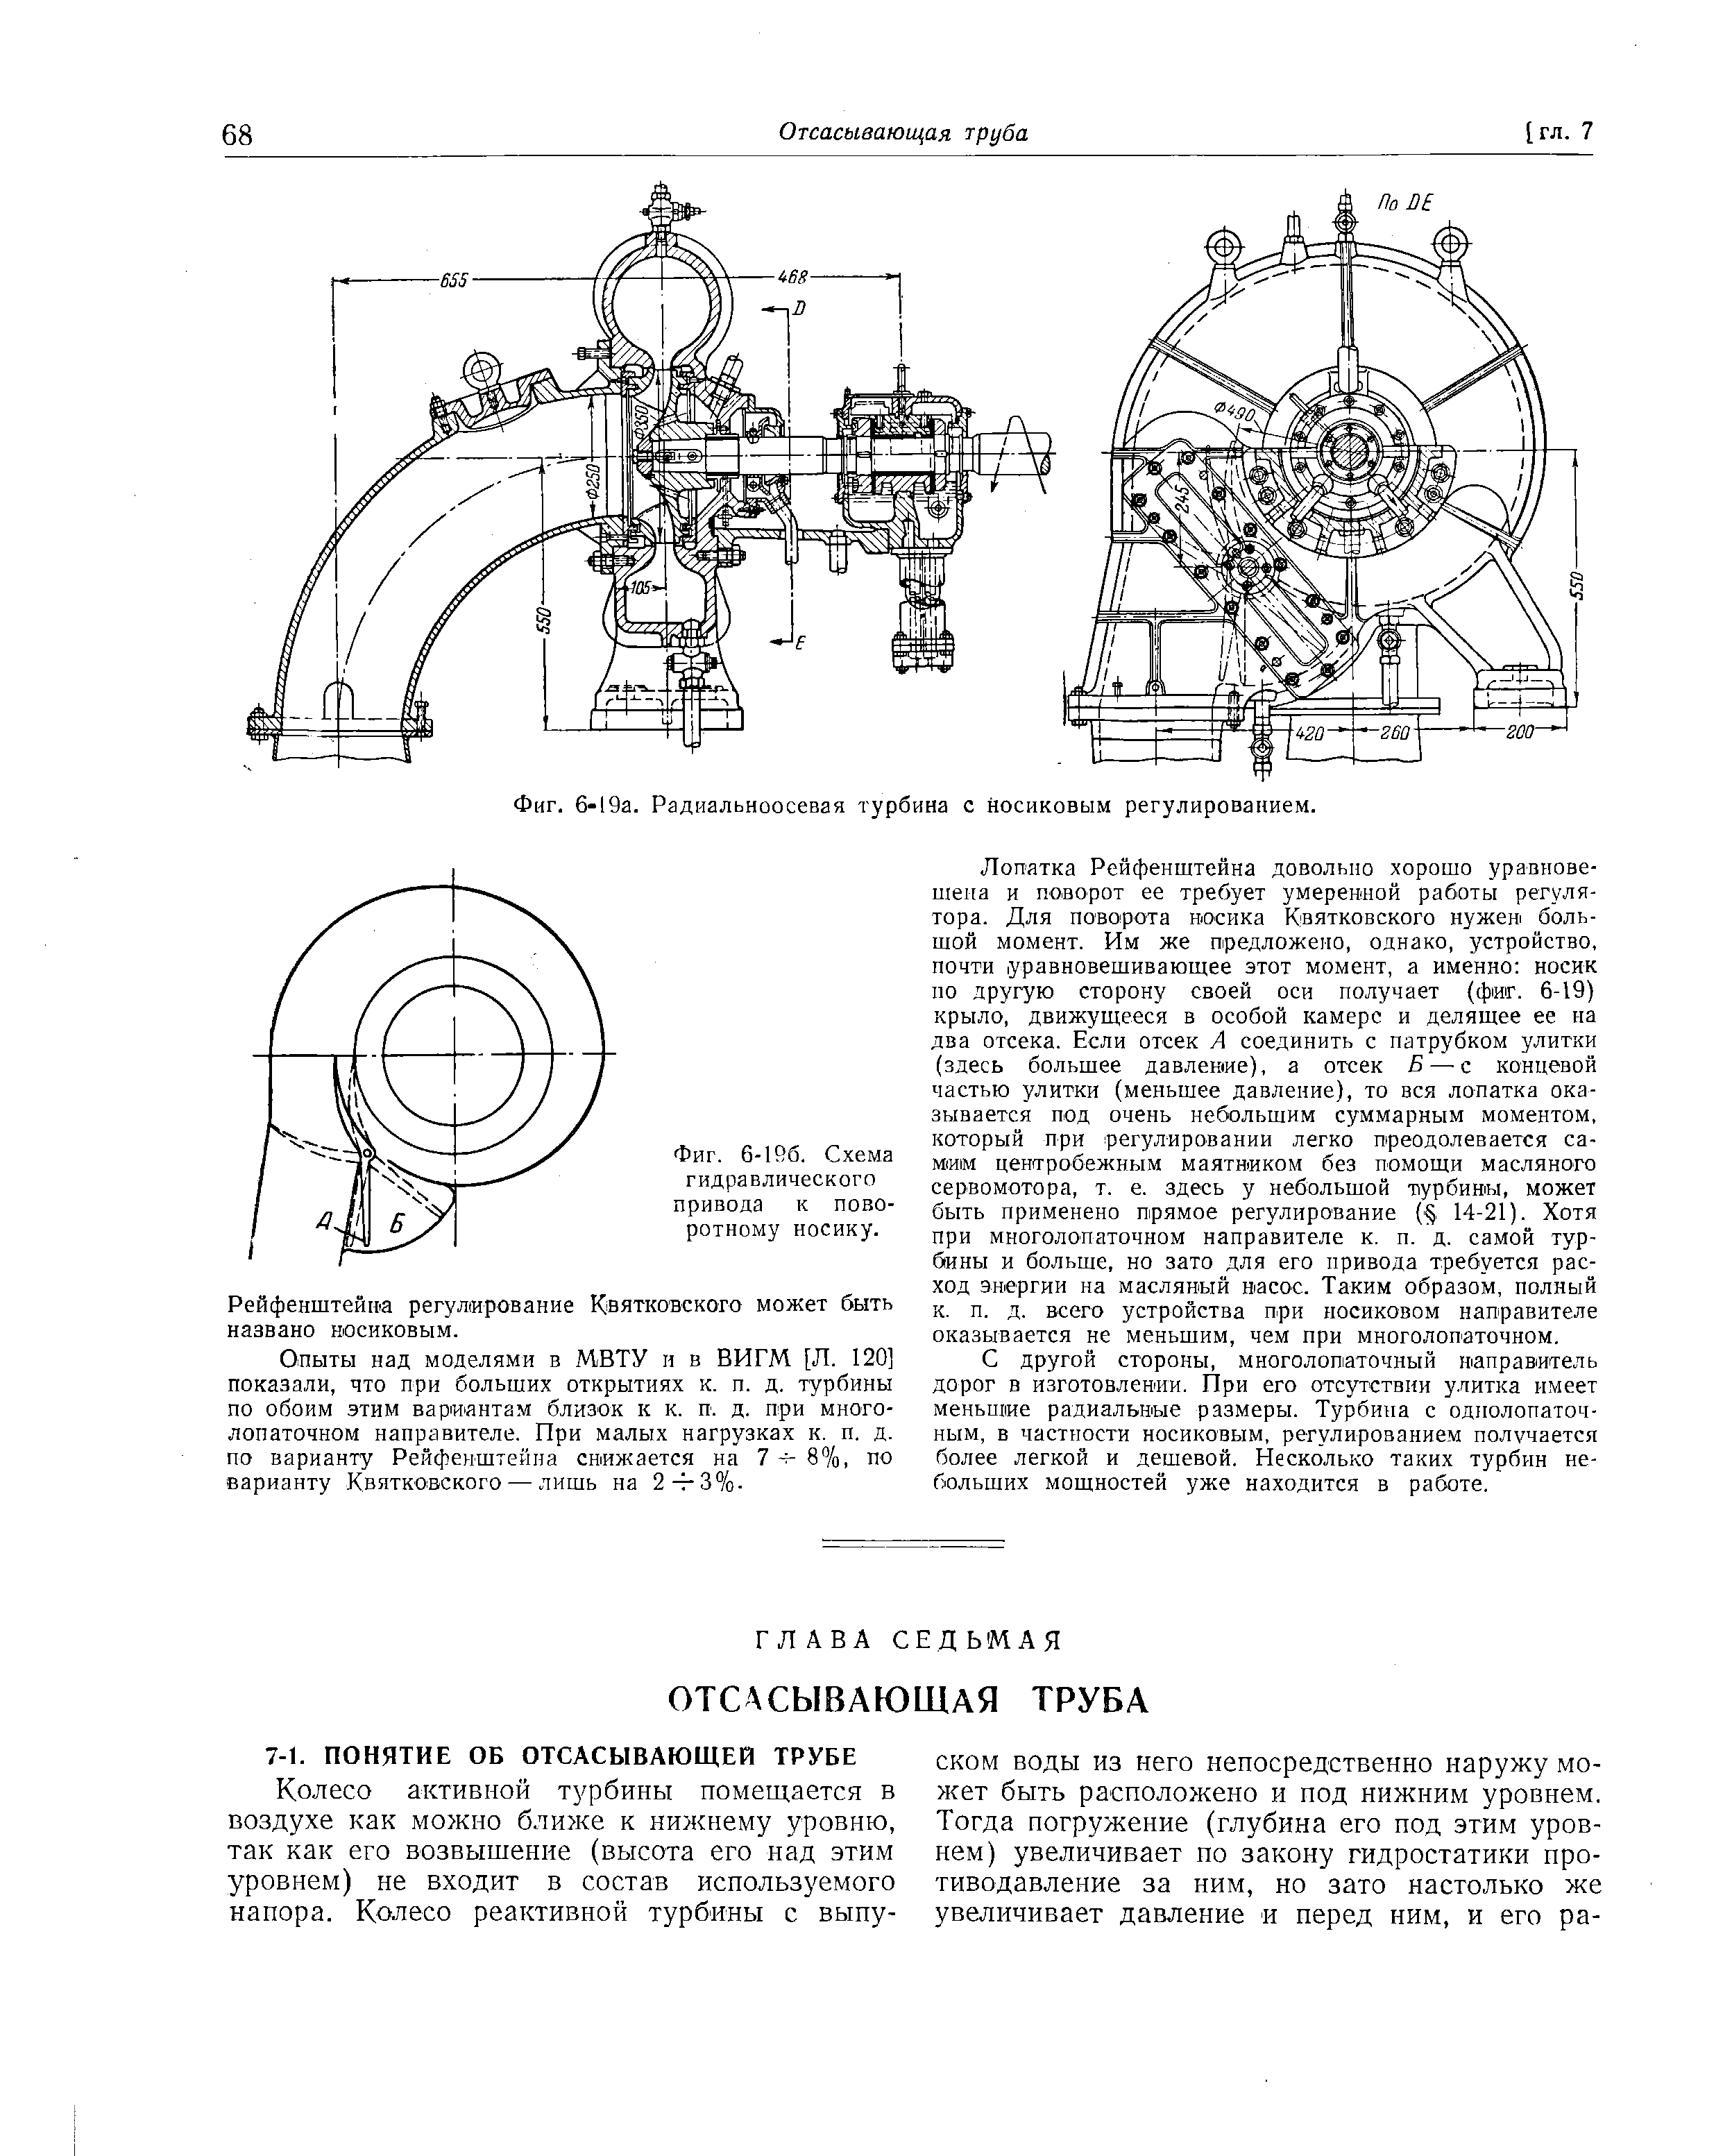 Фиг. 6-Шб. Схема гидравлического привода к поворотному носику.
